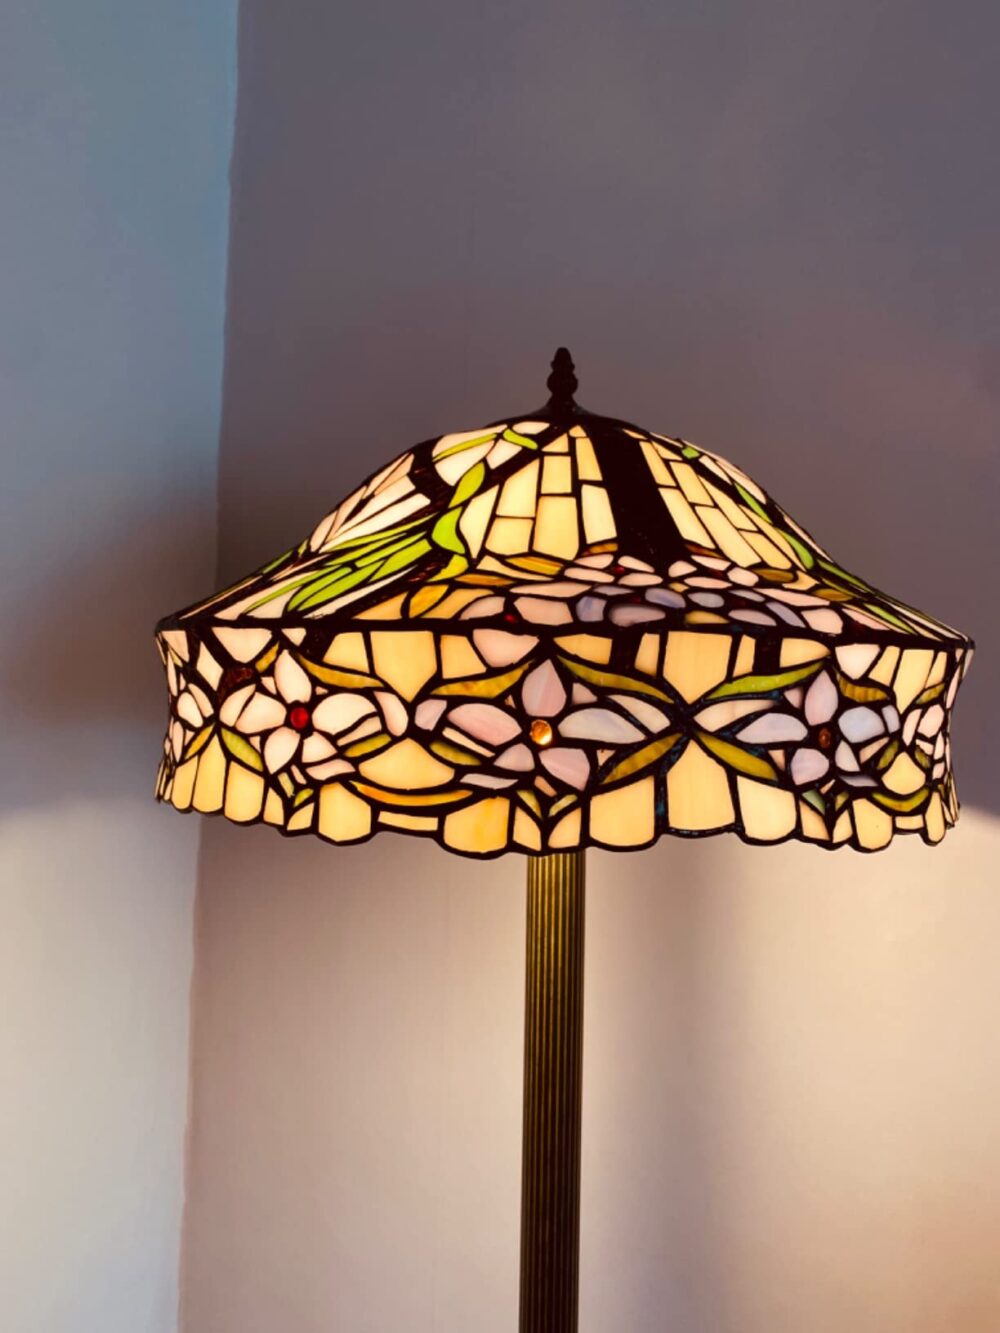 Vintage Tiffany Floor Lamps